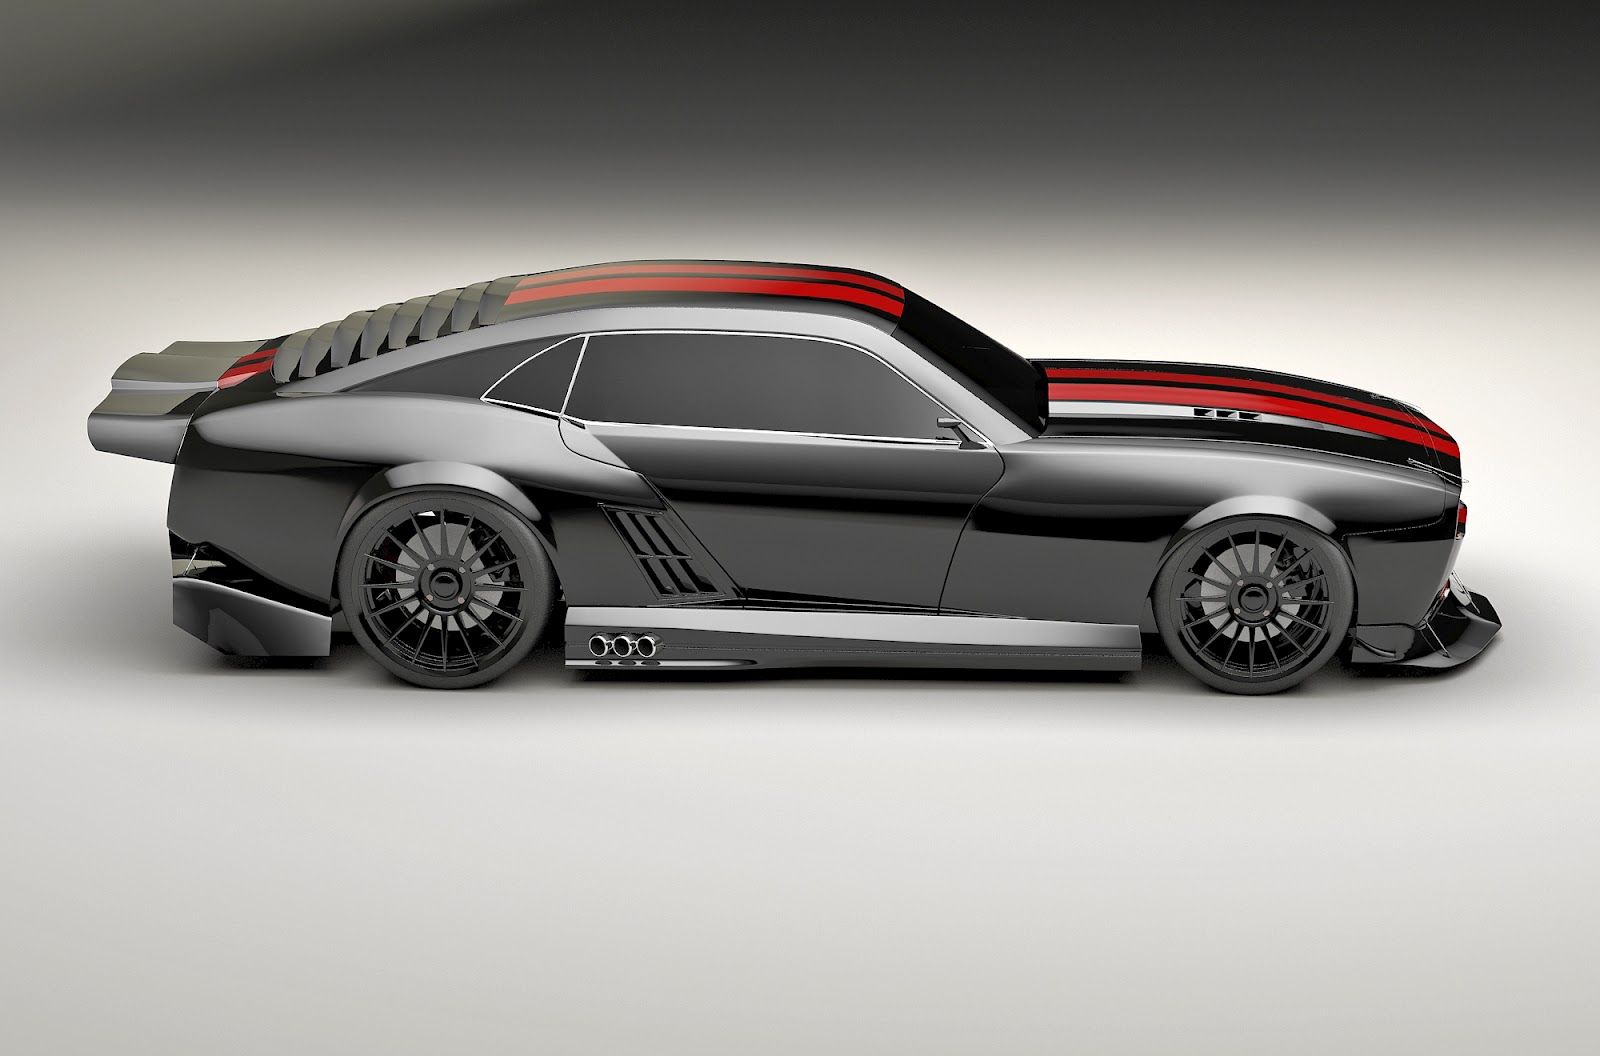 2012 Pontiac Firebird TT Black Edition Concept by Kasim Tlibekov